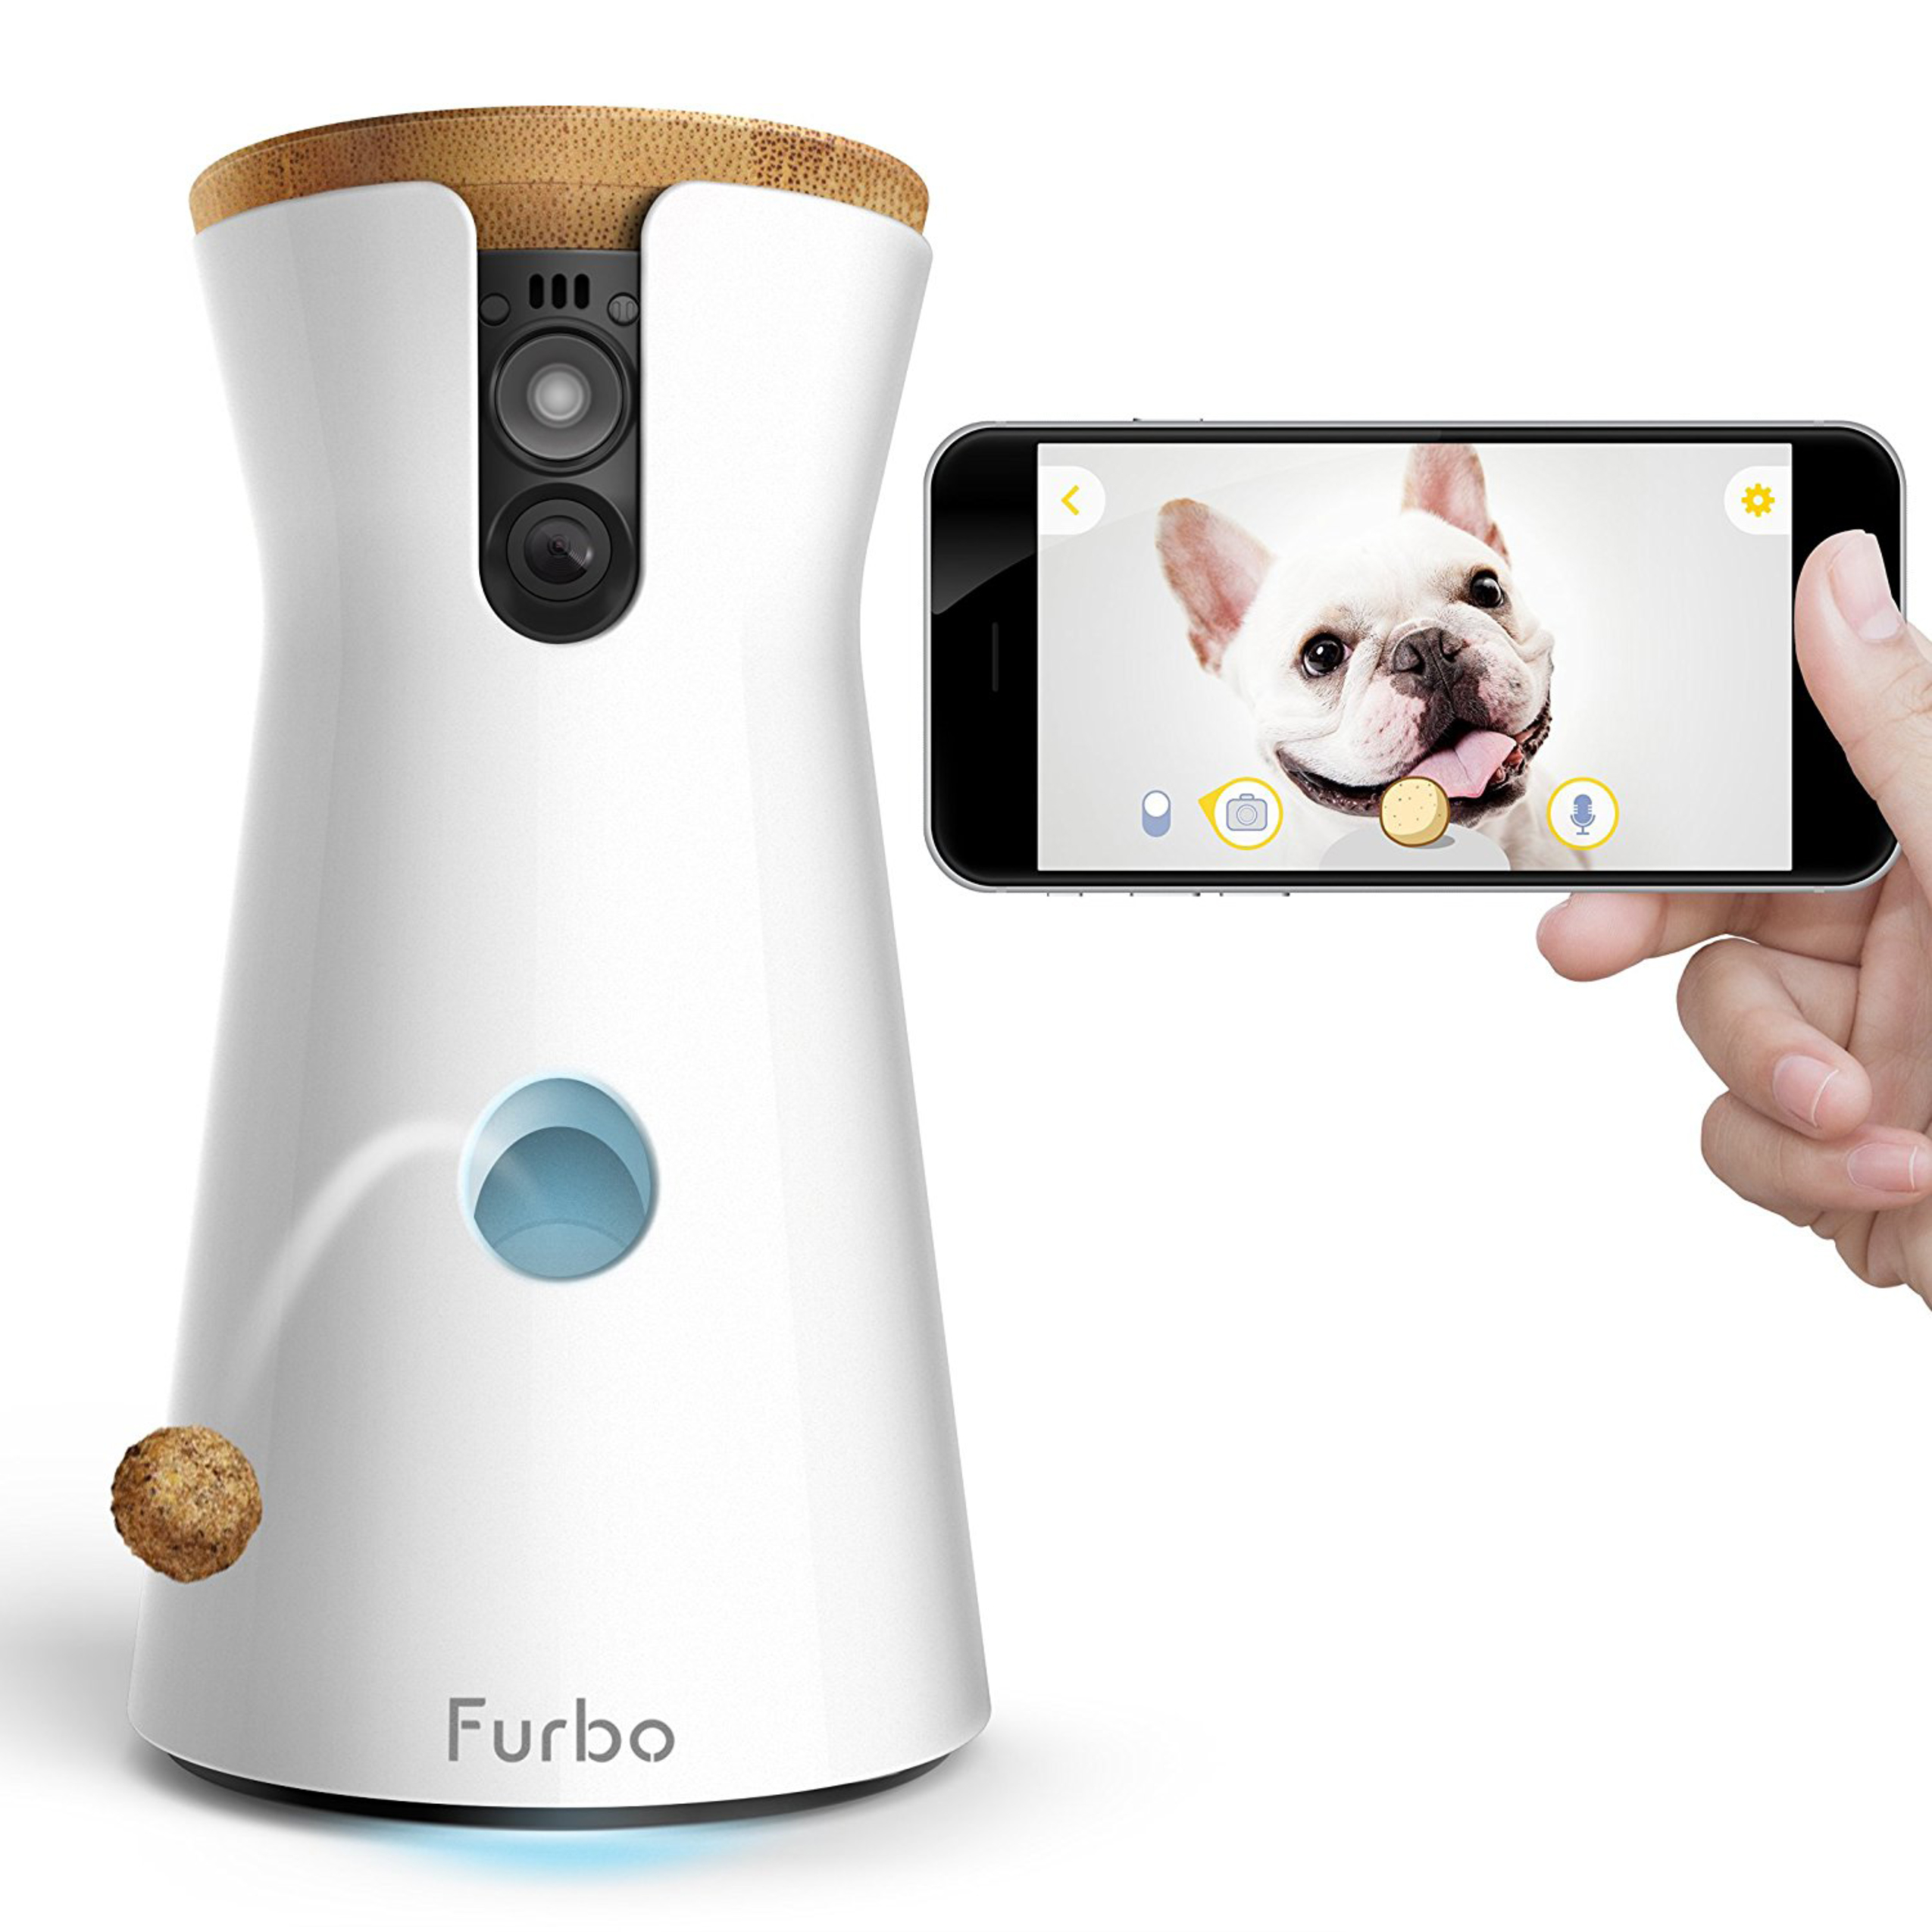 Review of the Furbo Dog Camera